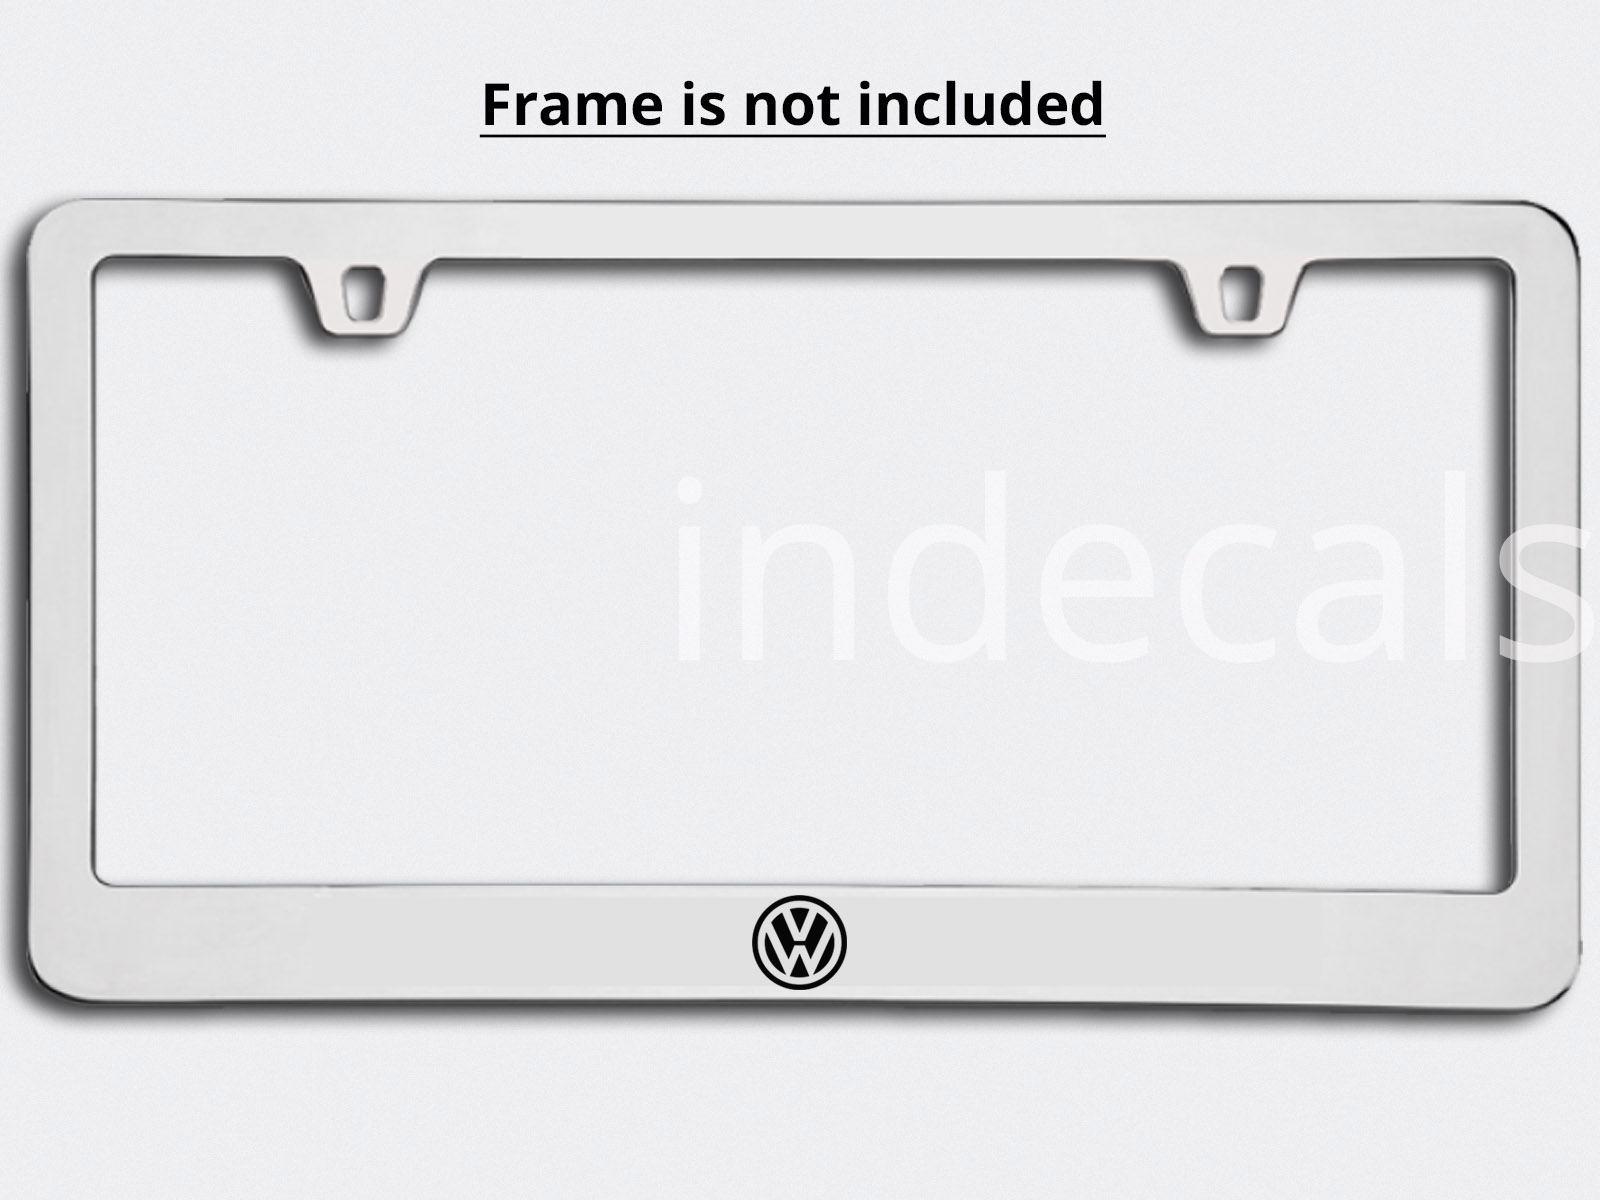 3 x Volkswagen Stickers for License Plate Frame - Black